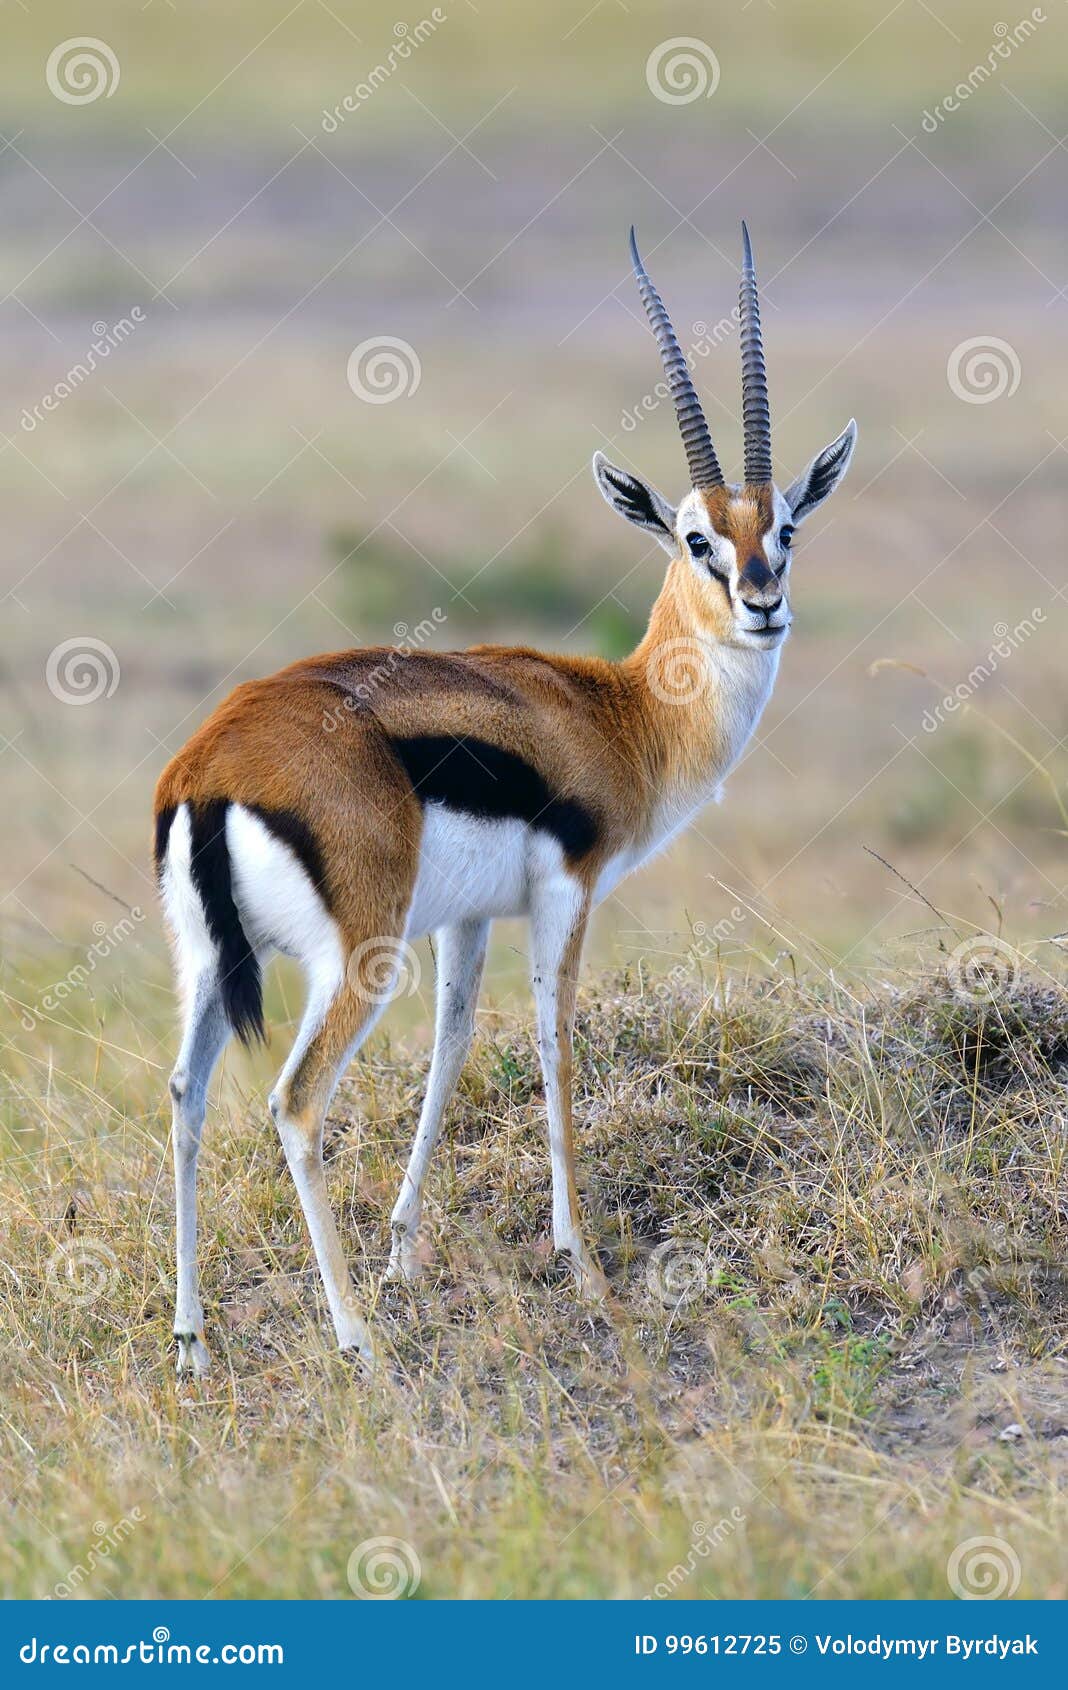 thomson`s gazelle on savanna